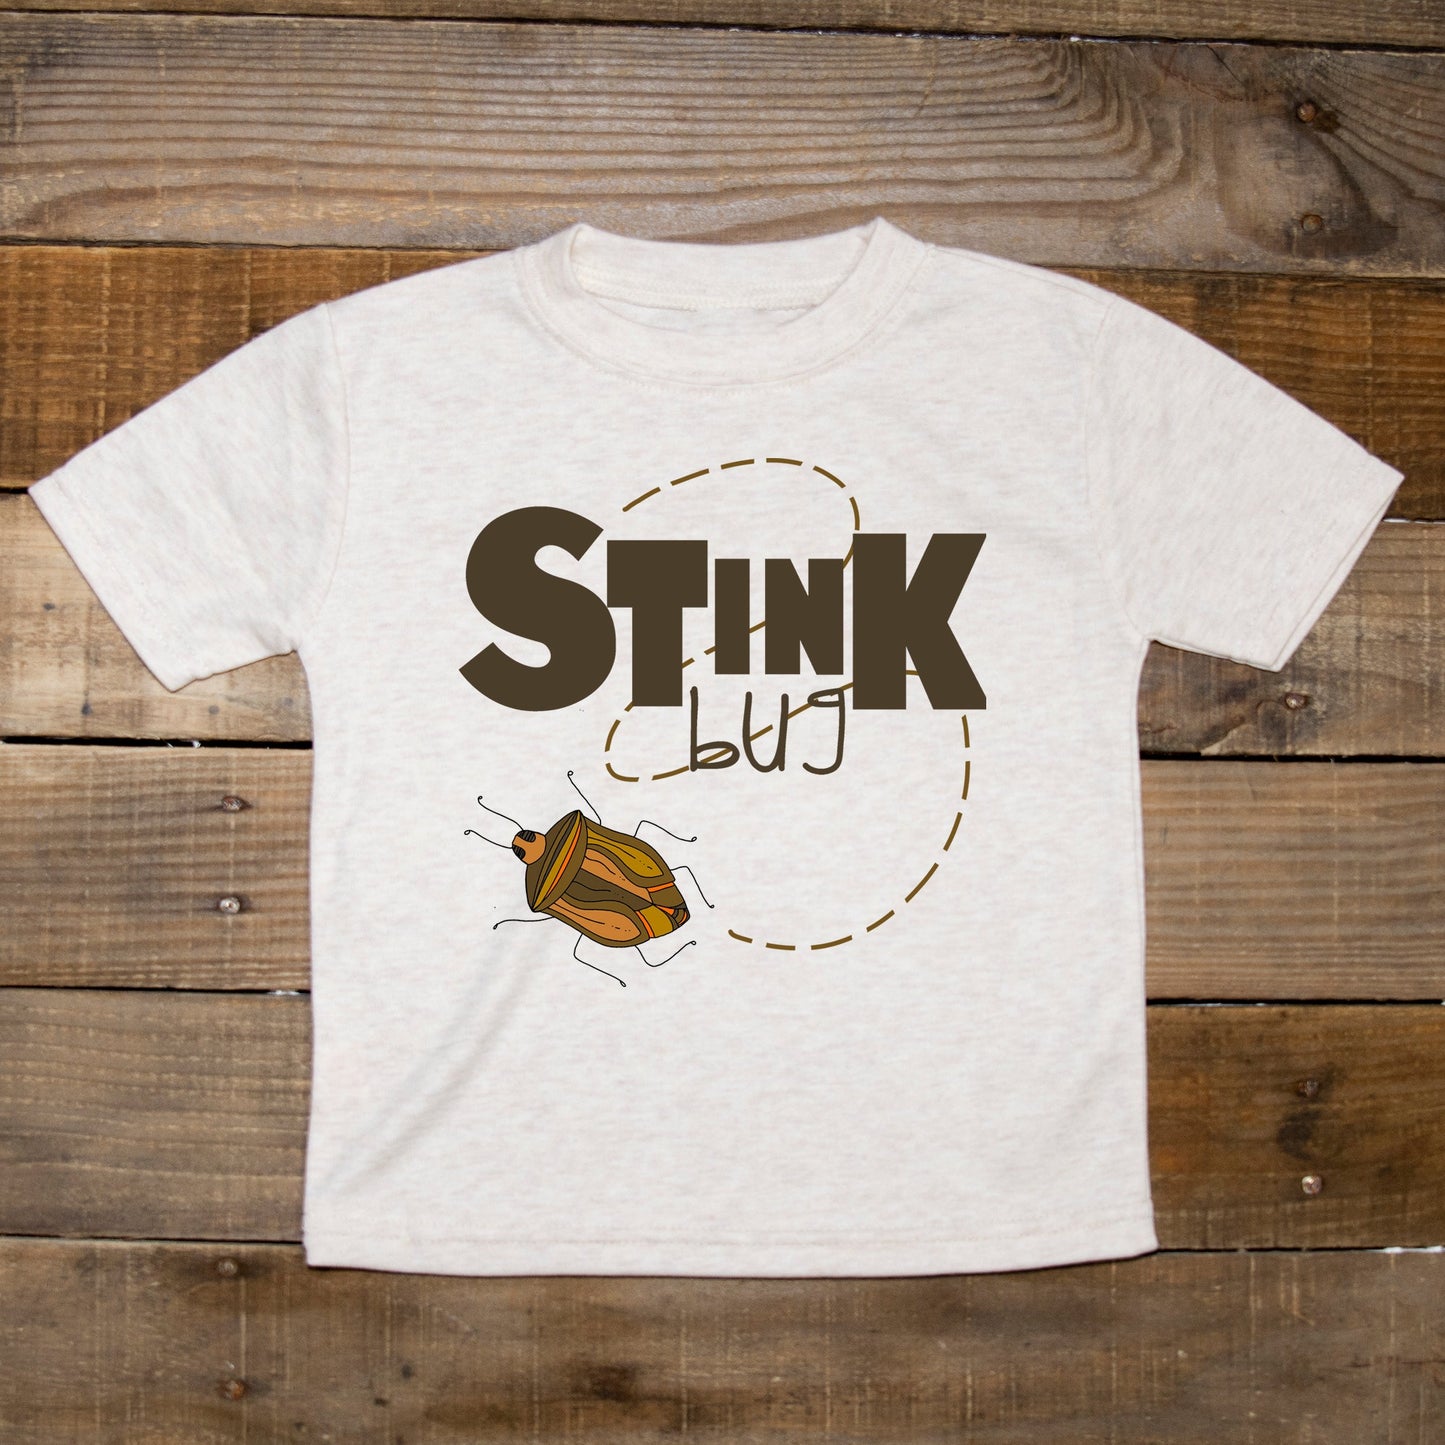 "Stink bug" t-shirt